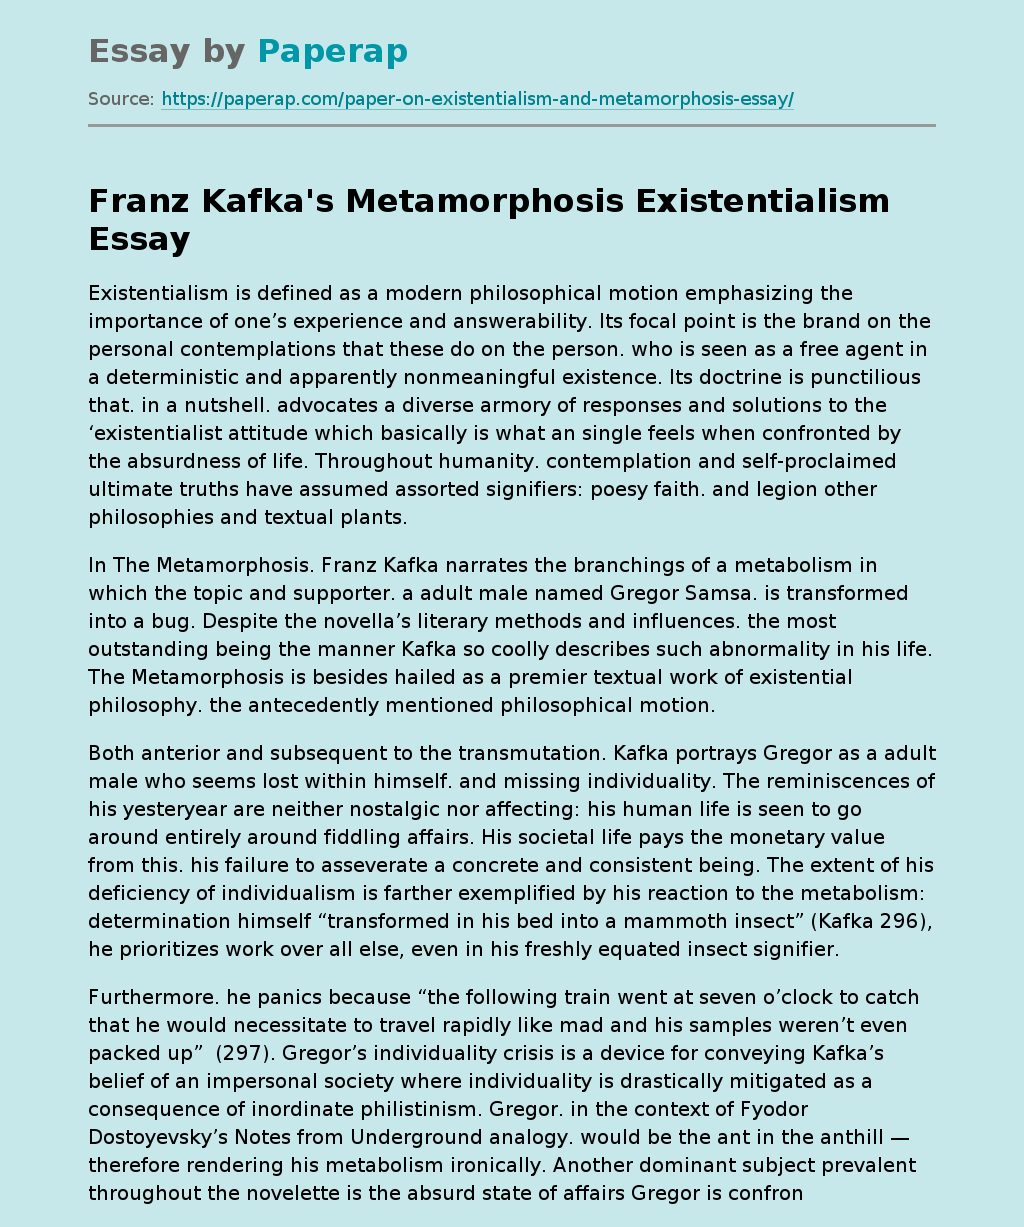 Franz Kafka's Metamorphosis Existentialism